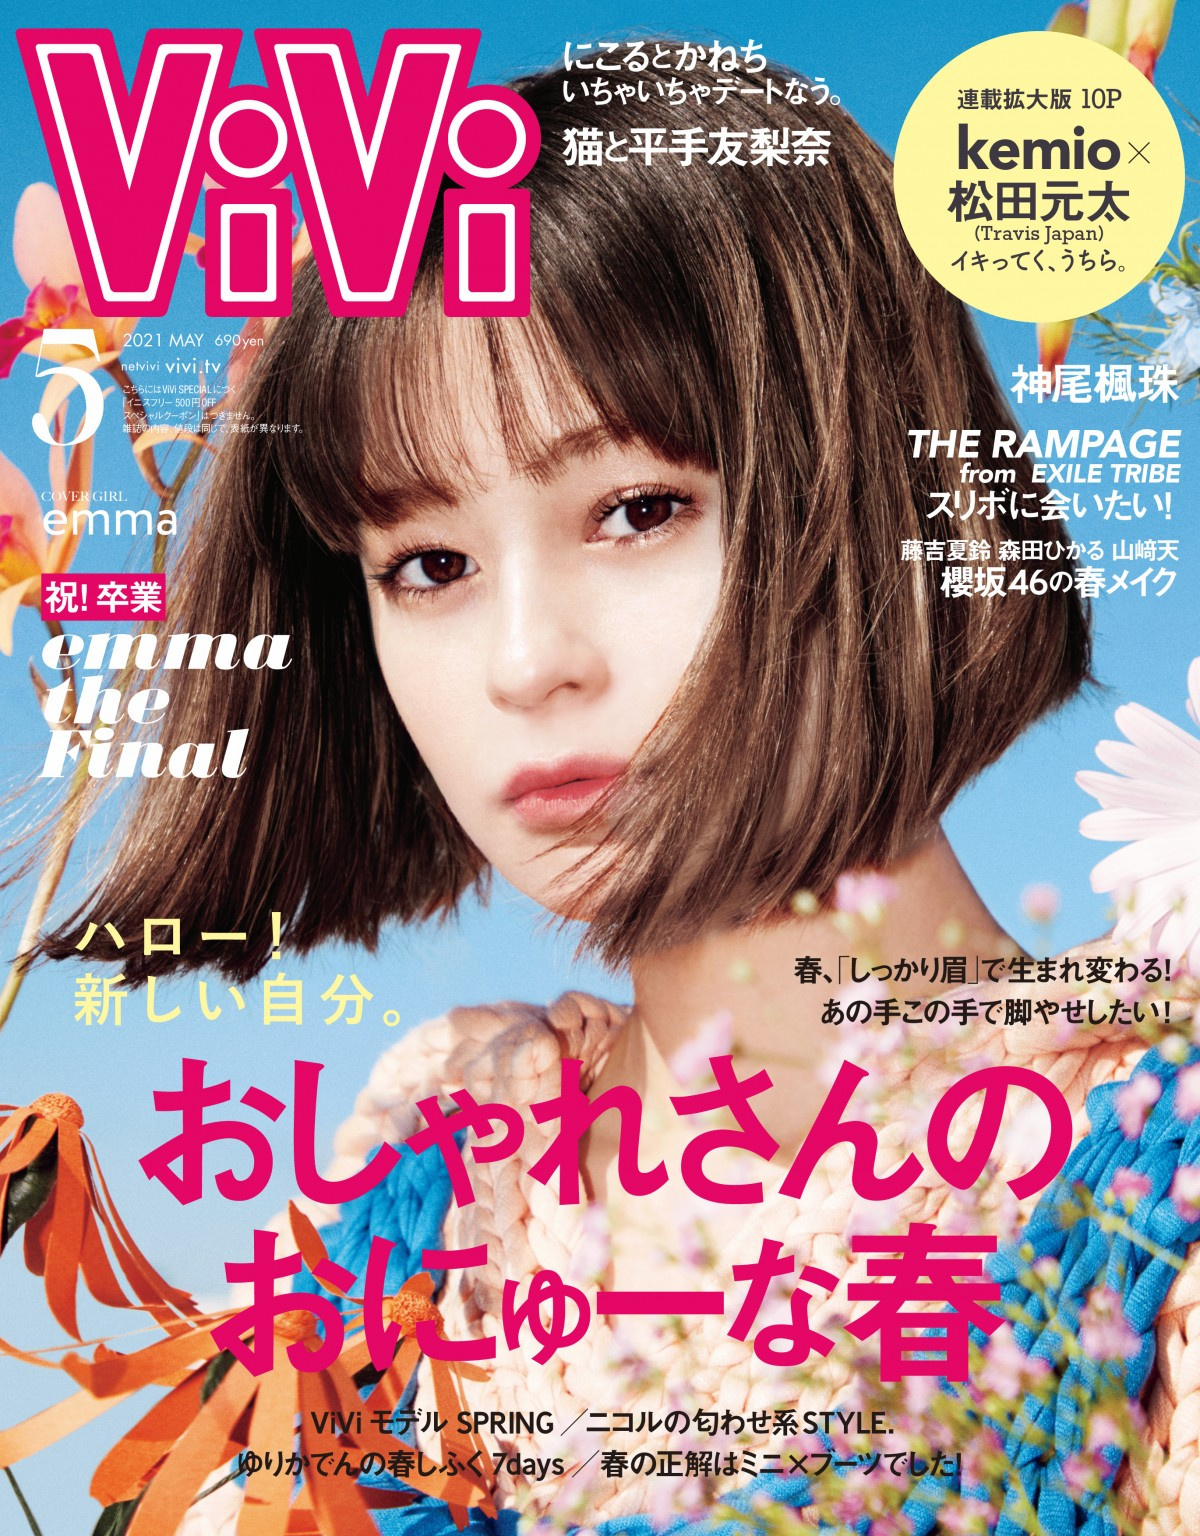 Viviモデル Emma 卒業号で表紙 15p特集 最後だから アツい気持ち告白 Oricon News